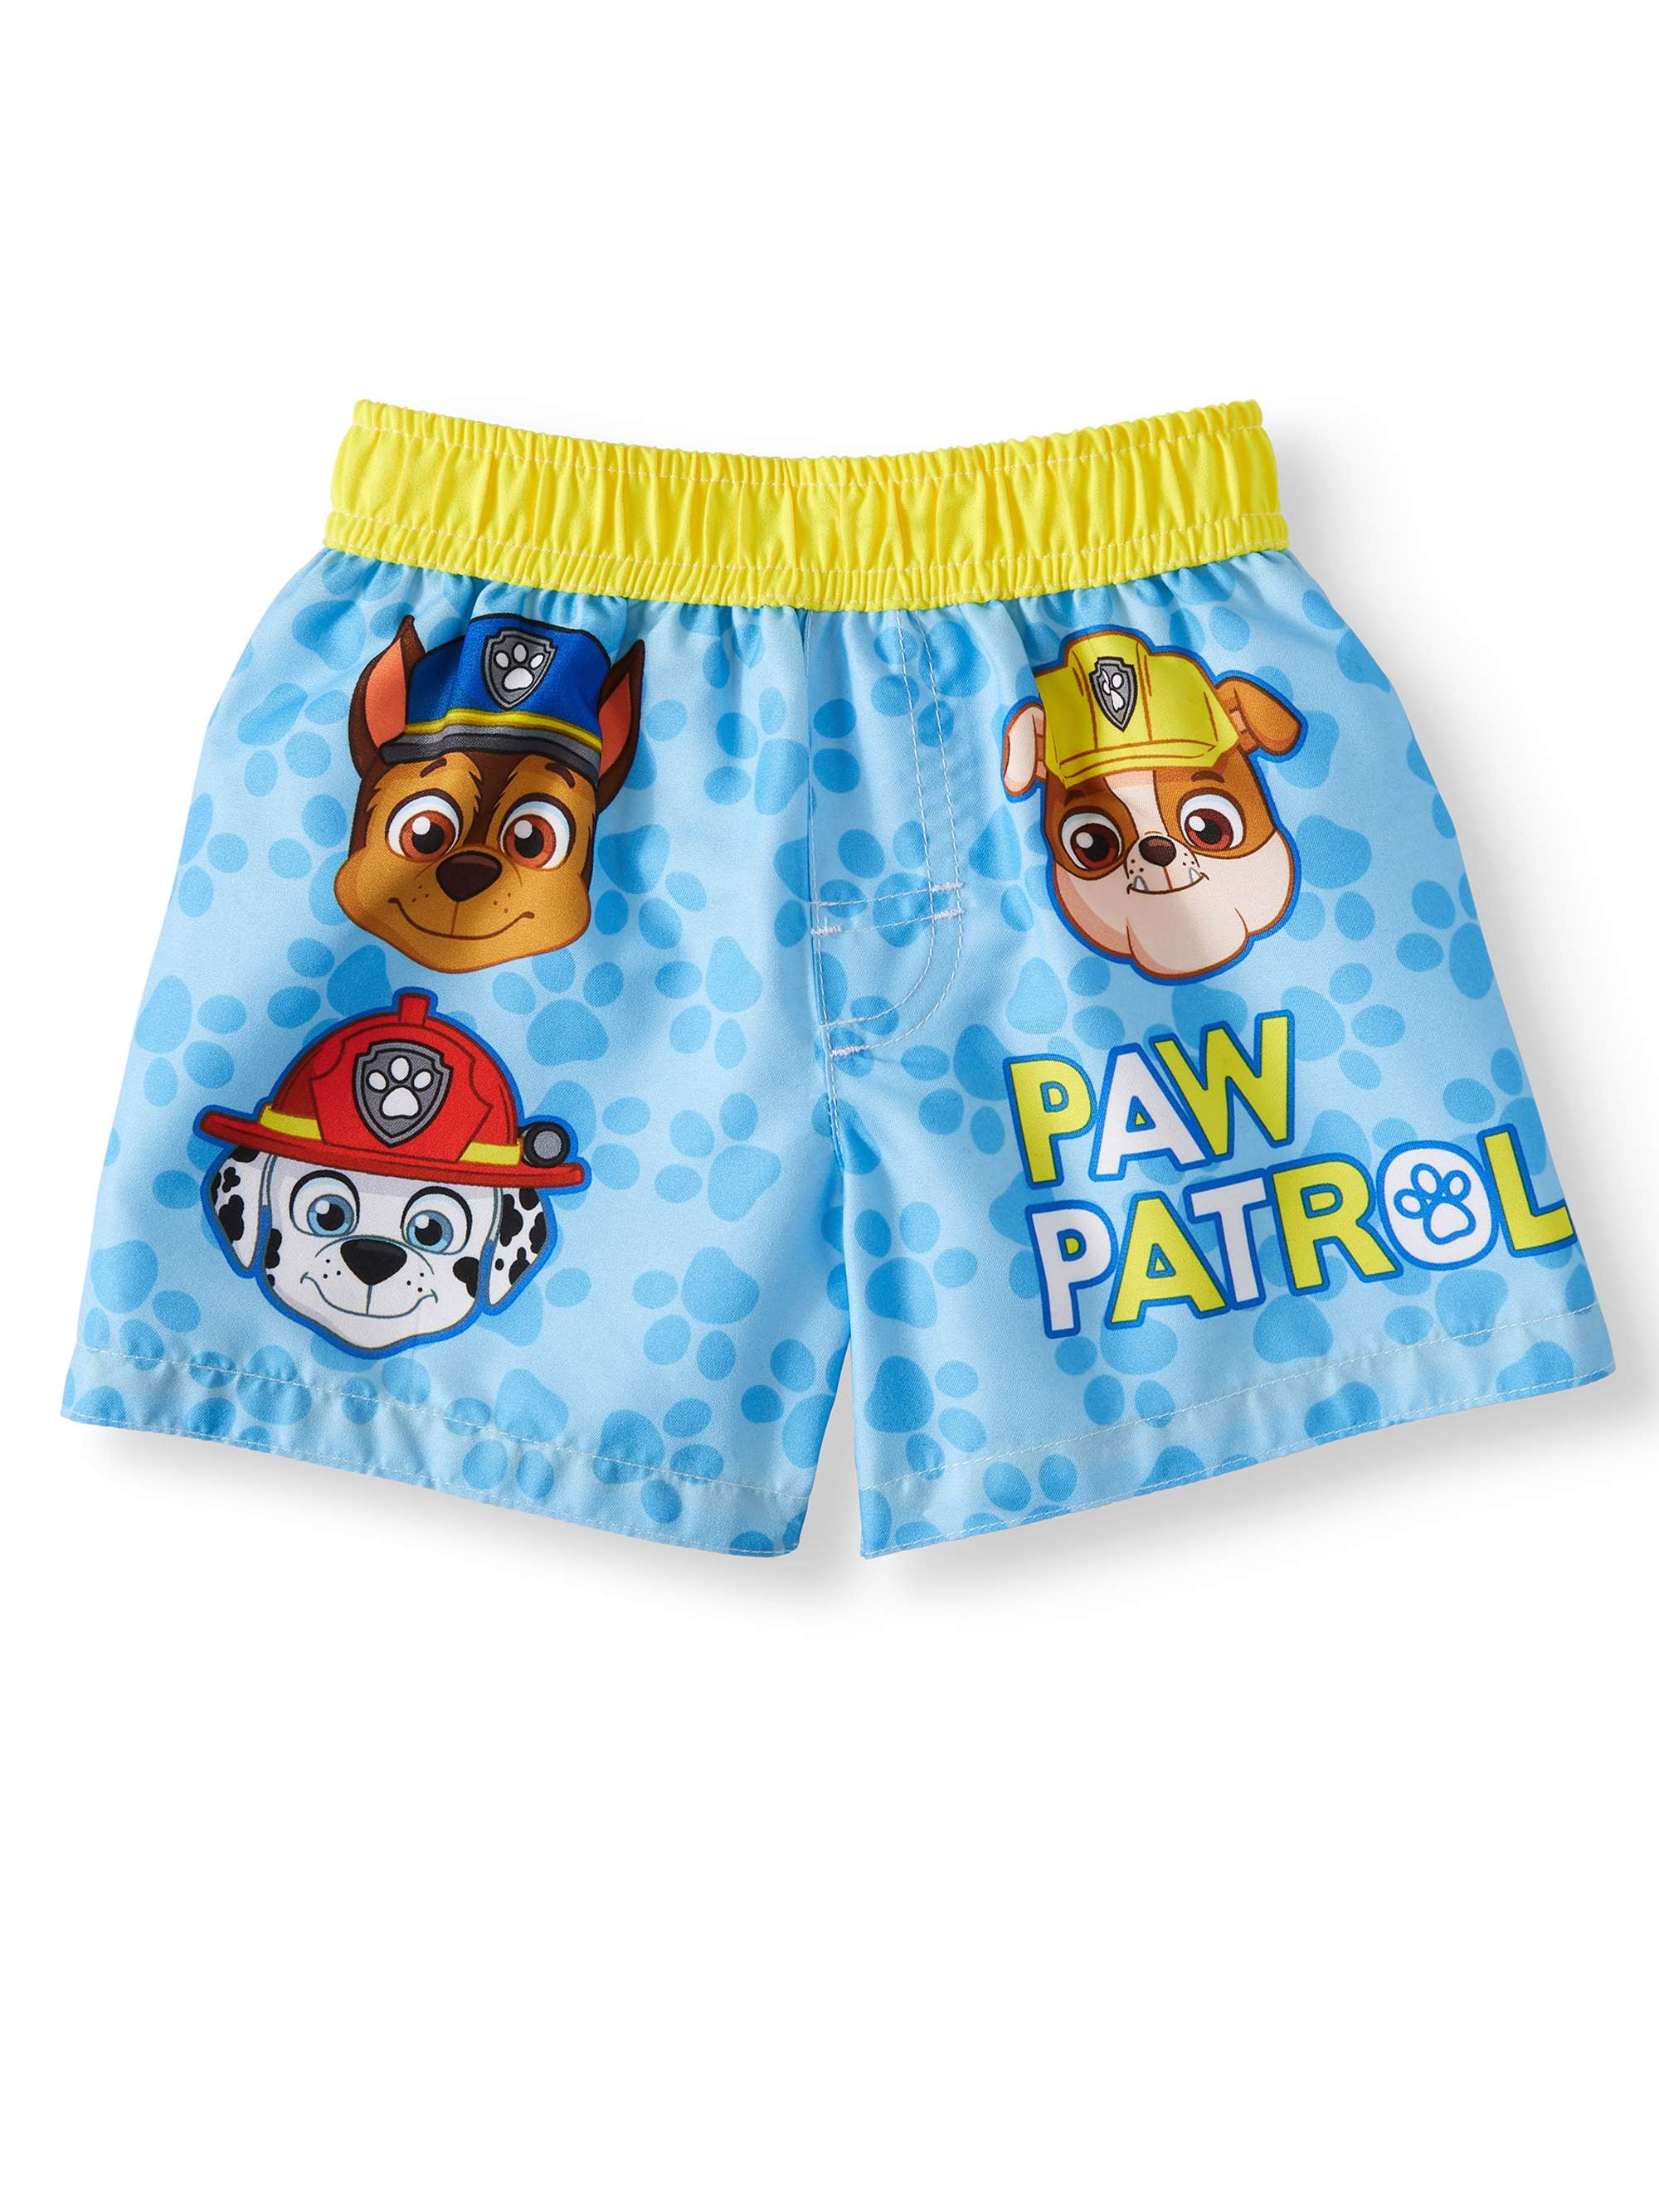 Nickelodeon Paw Patrol Boys Swim Trunks Size 5//6 Comfort Liner Swimming Pants